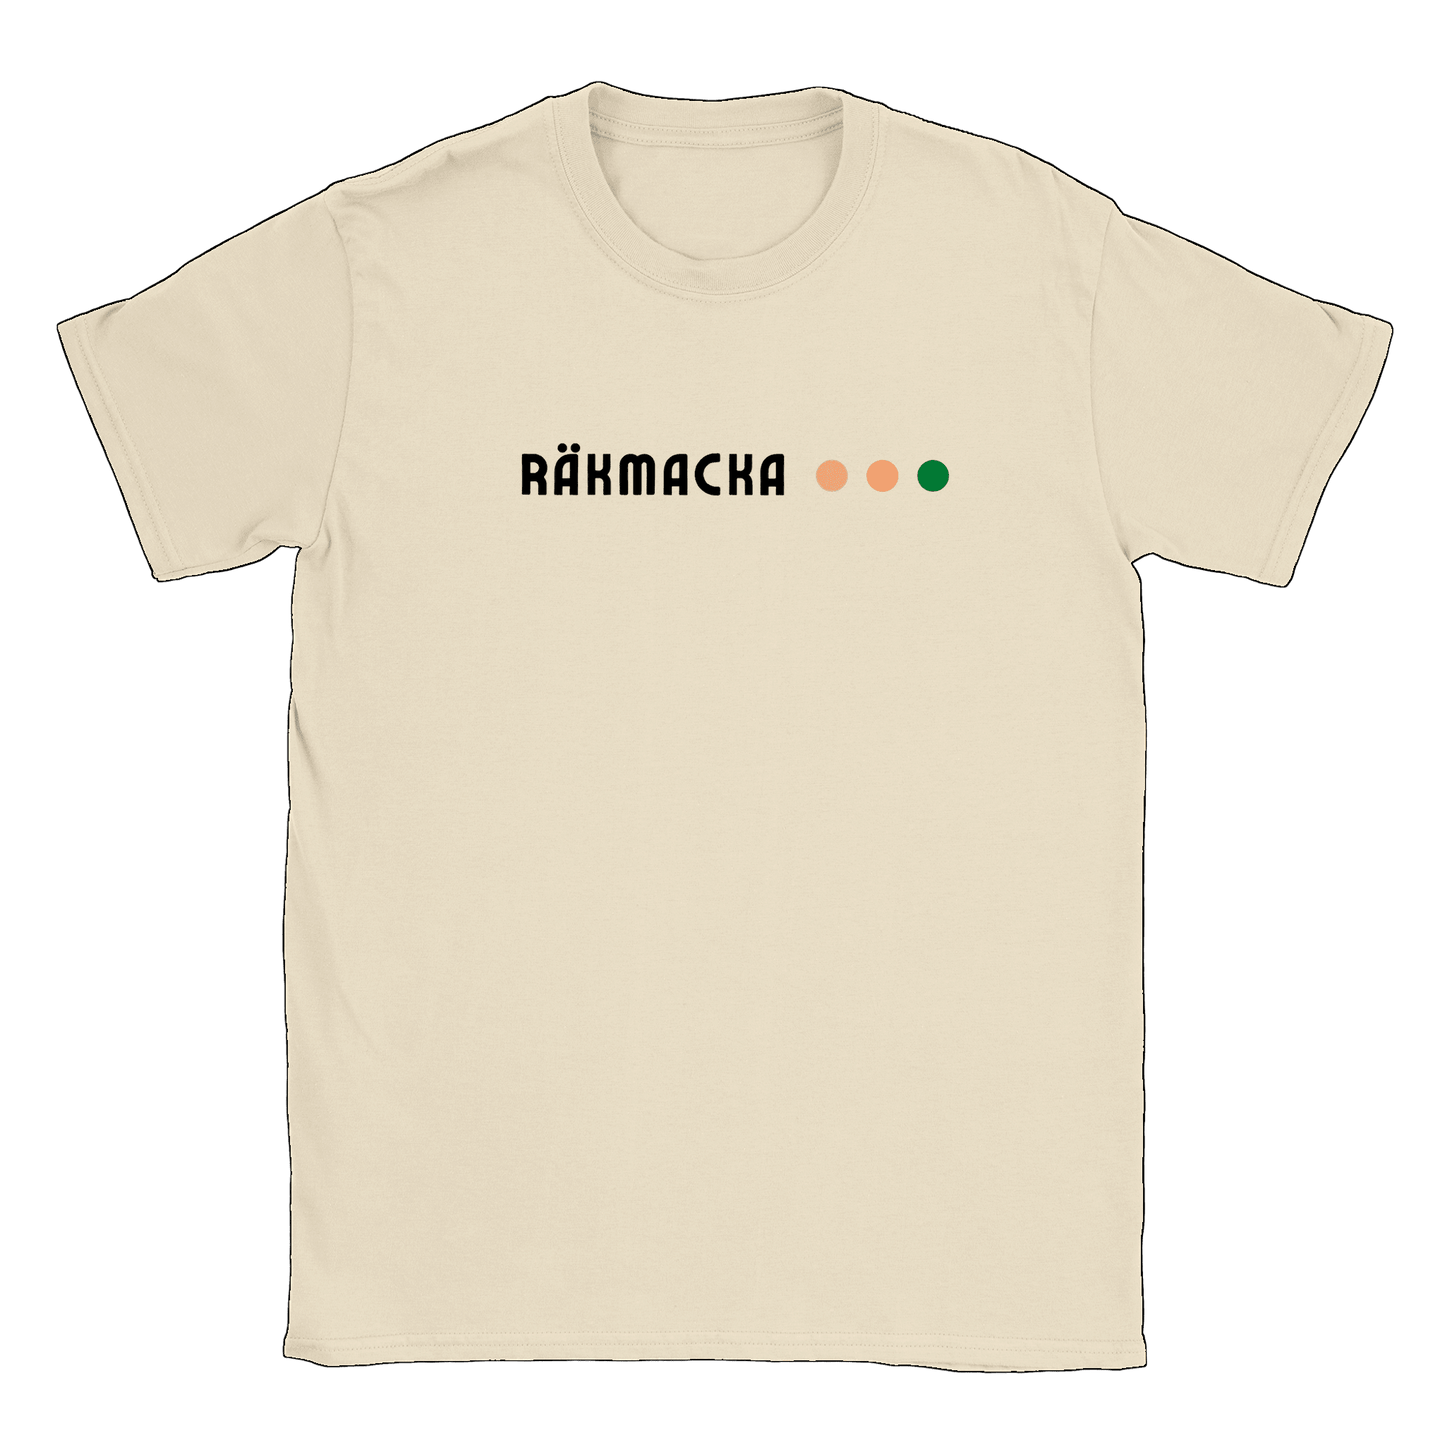 Räkmacka - T-shirt Beige